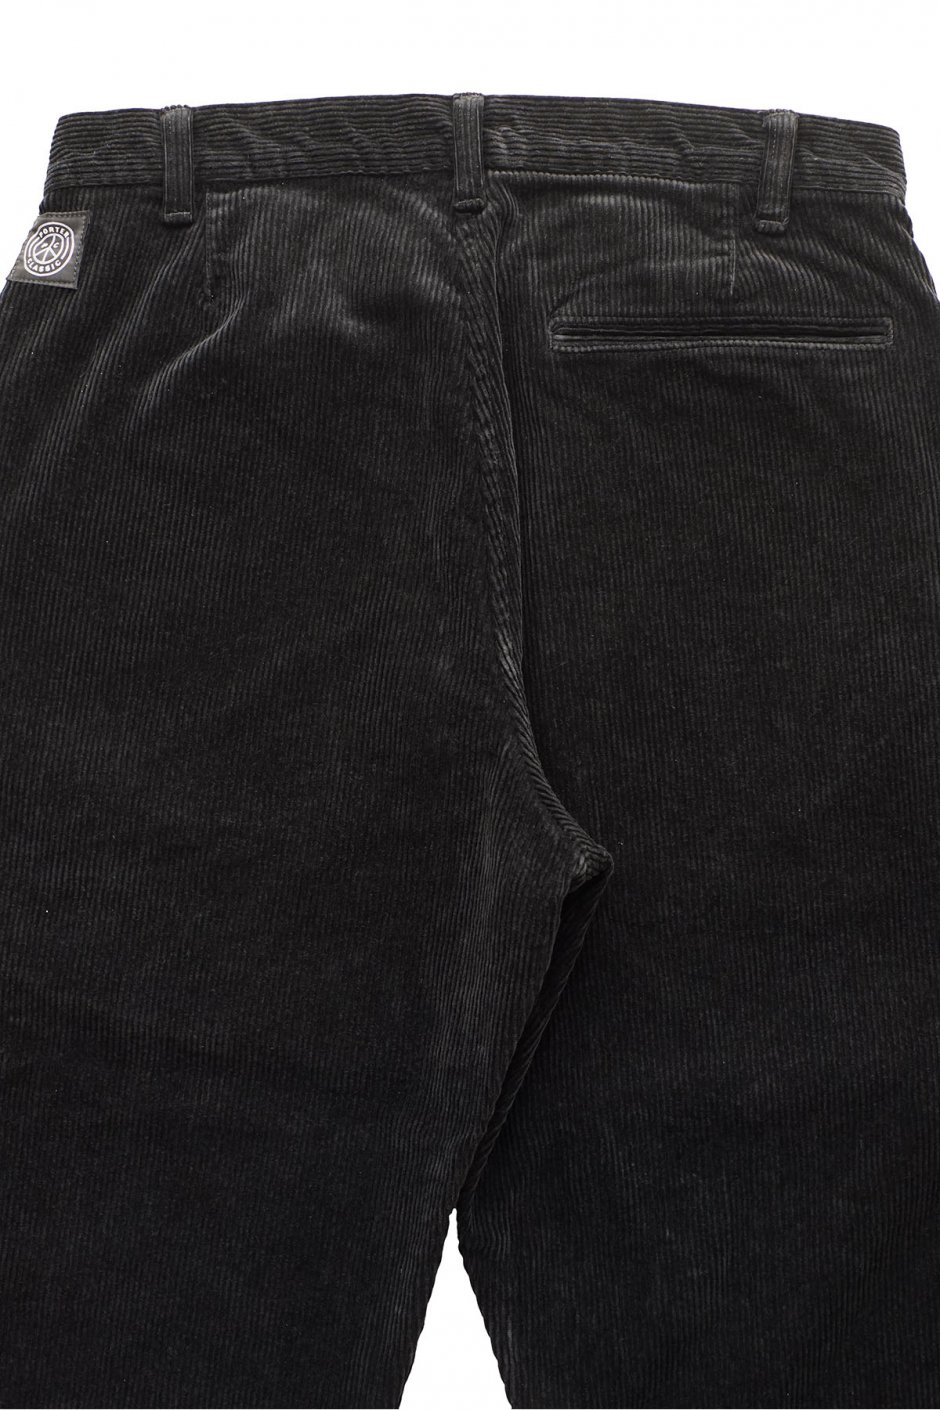 Porter Classic - CORDUROY PANTS type 2012 MOLESKIN - BLACK 